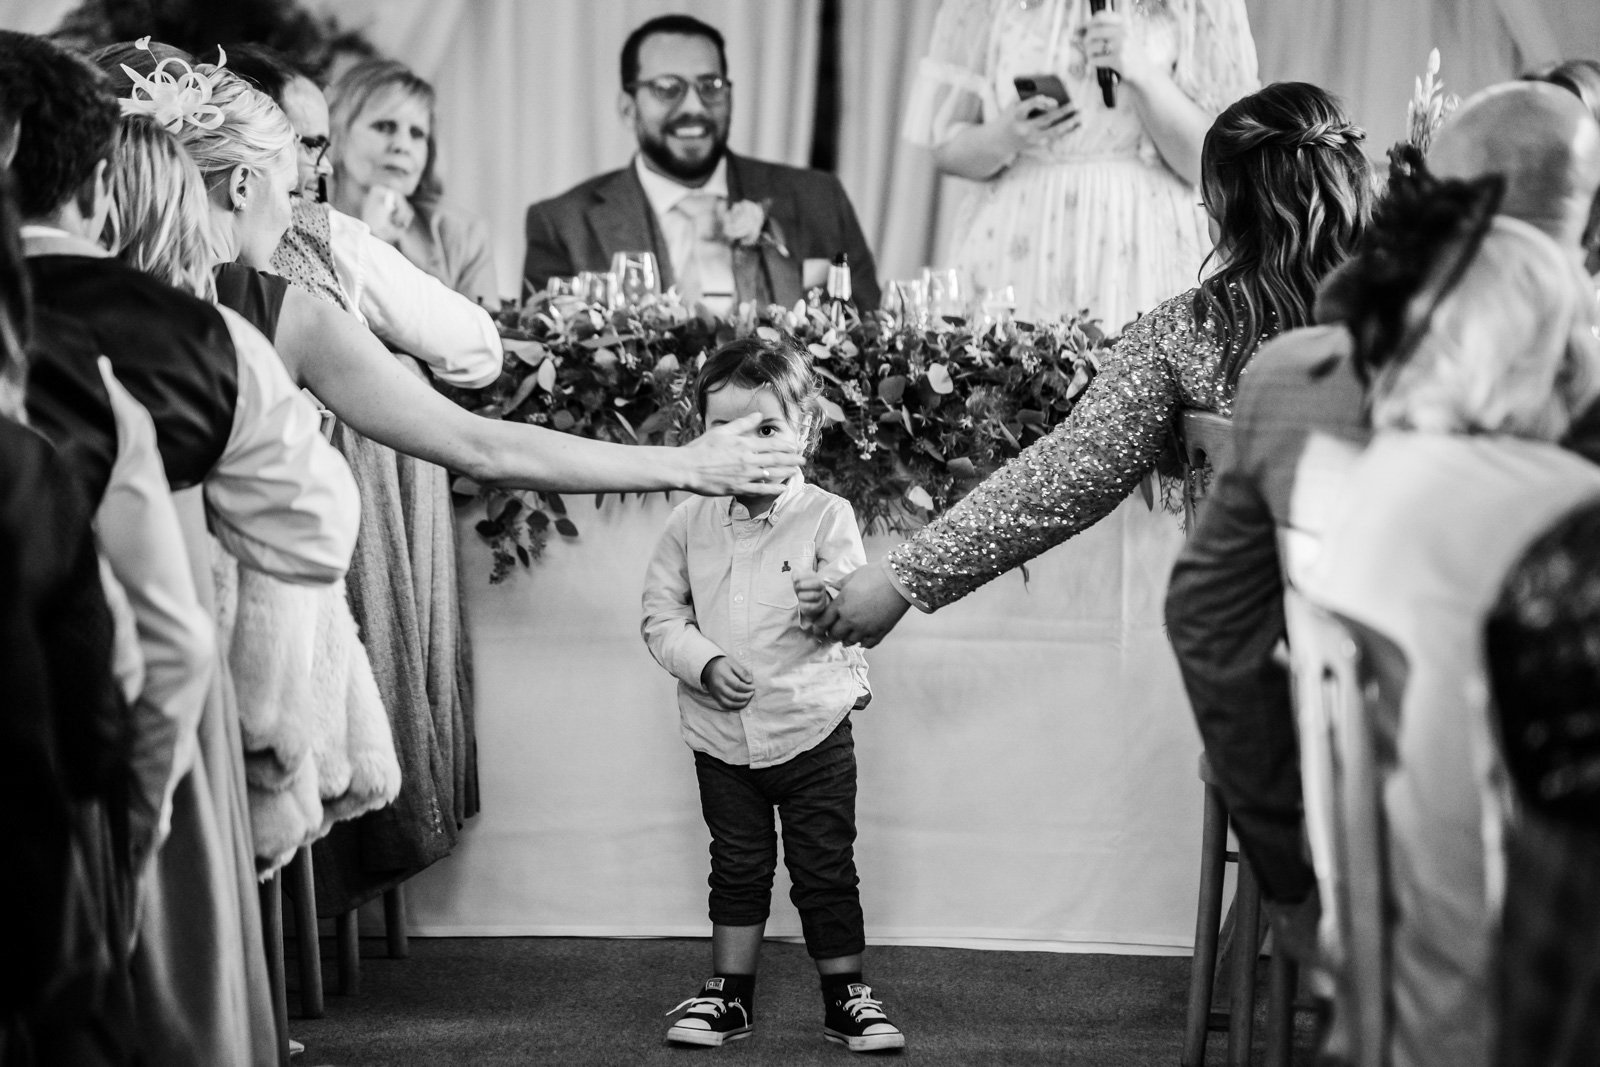 small child during the speeches of a wedding - 2022 wedding round up no nonsense heartfelt wedding photography leeallenphotos